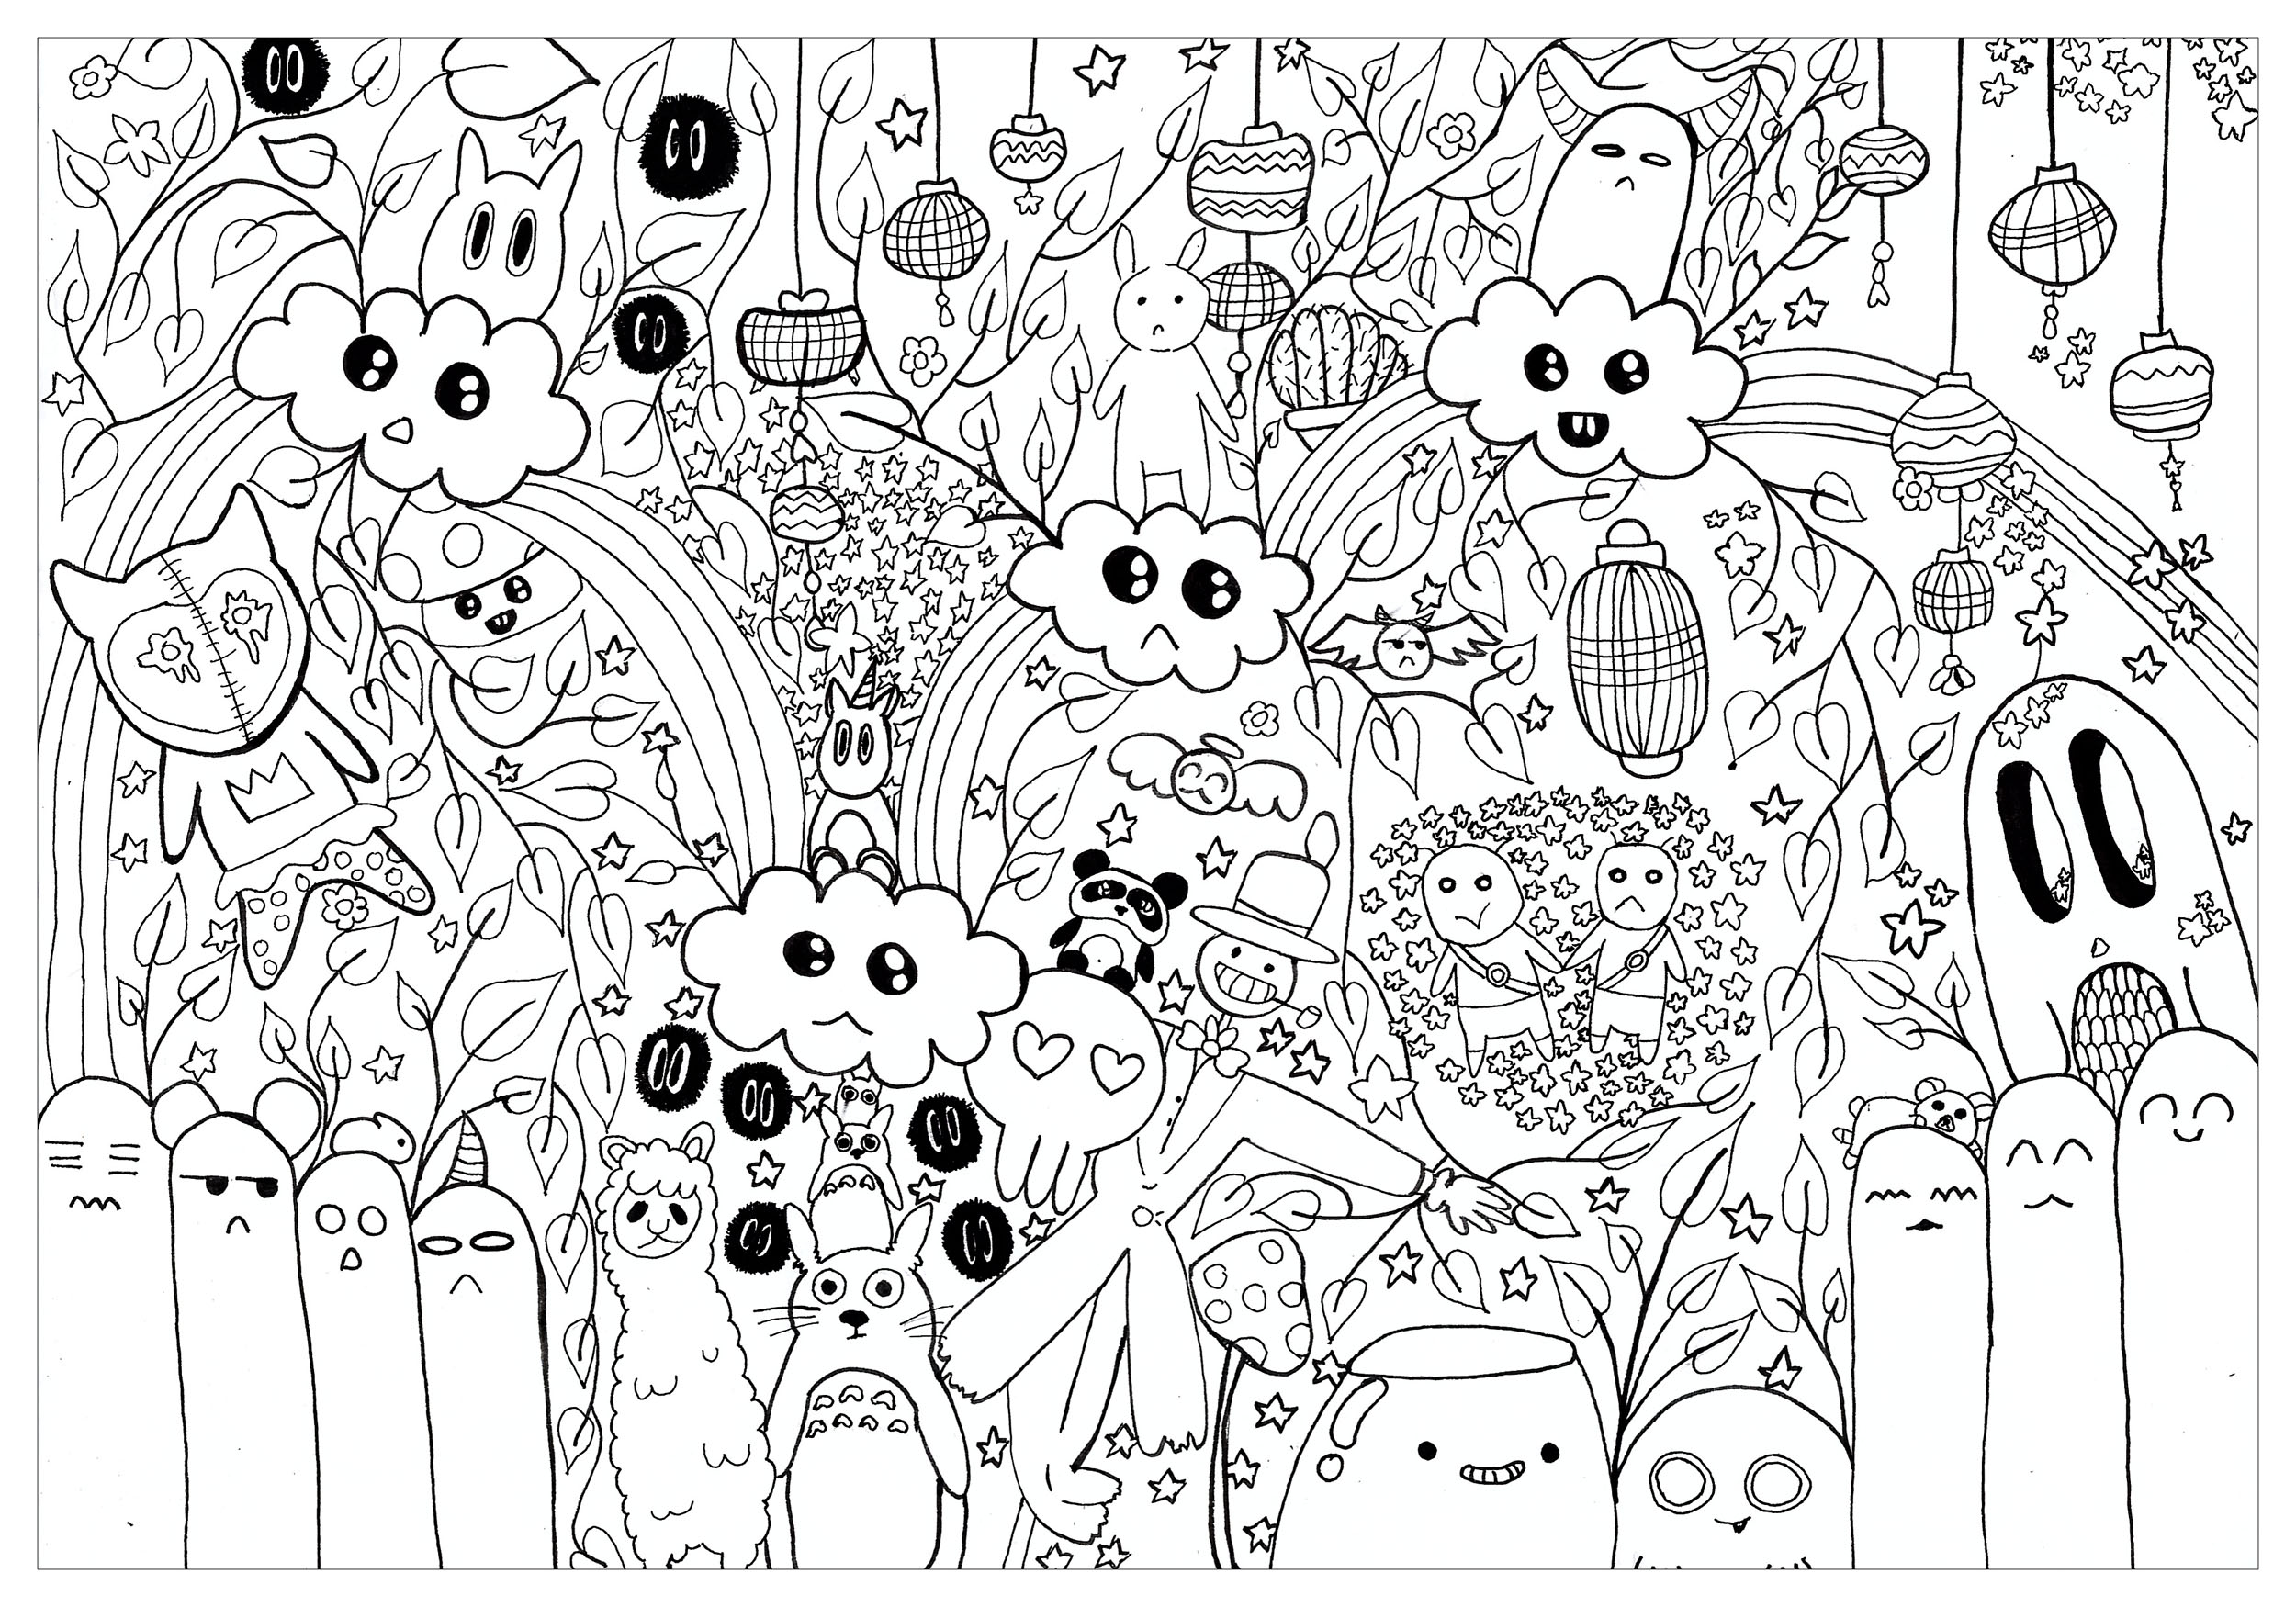 Doodle inspired by the World of Hayao Miyazaki / Ghibli studio, with some kawaii characters